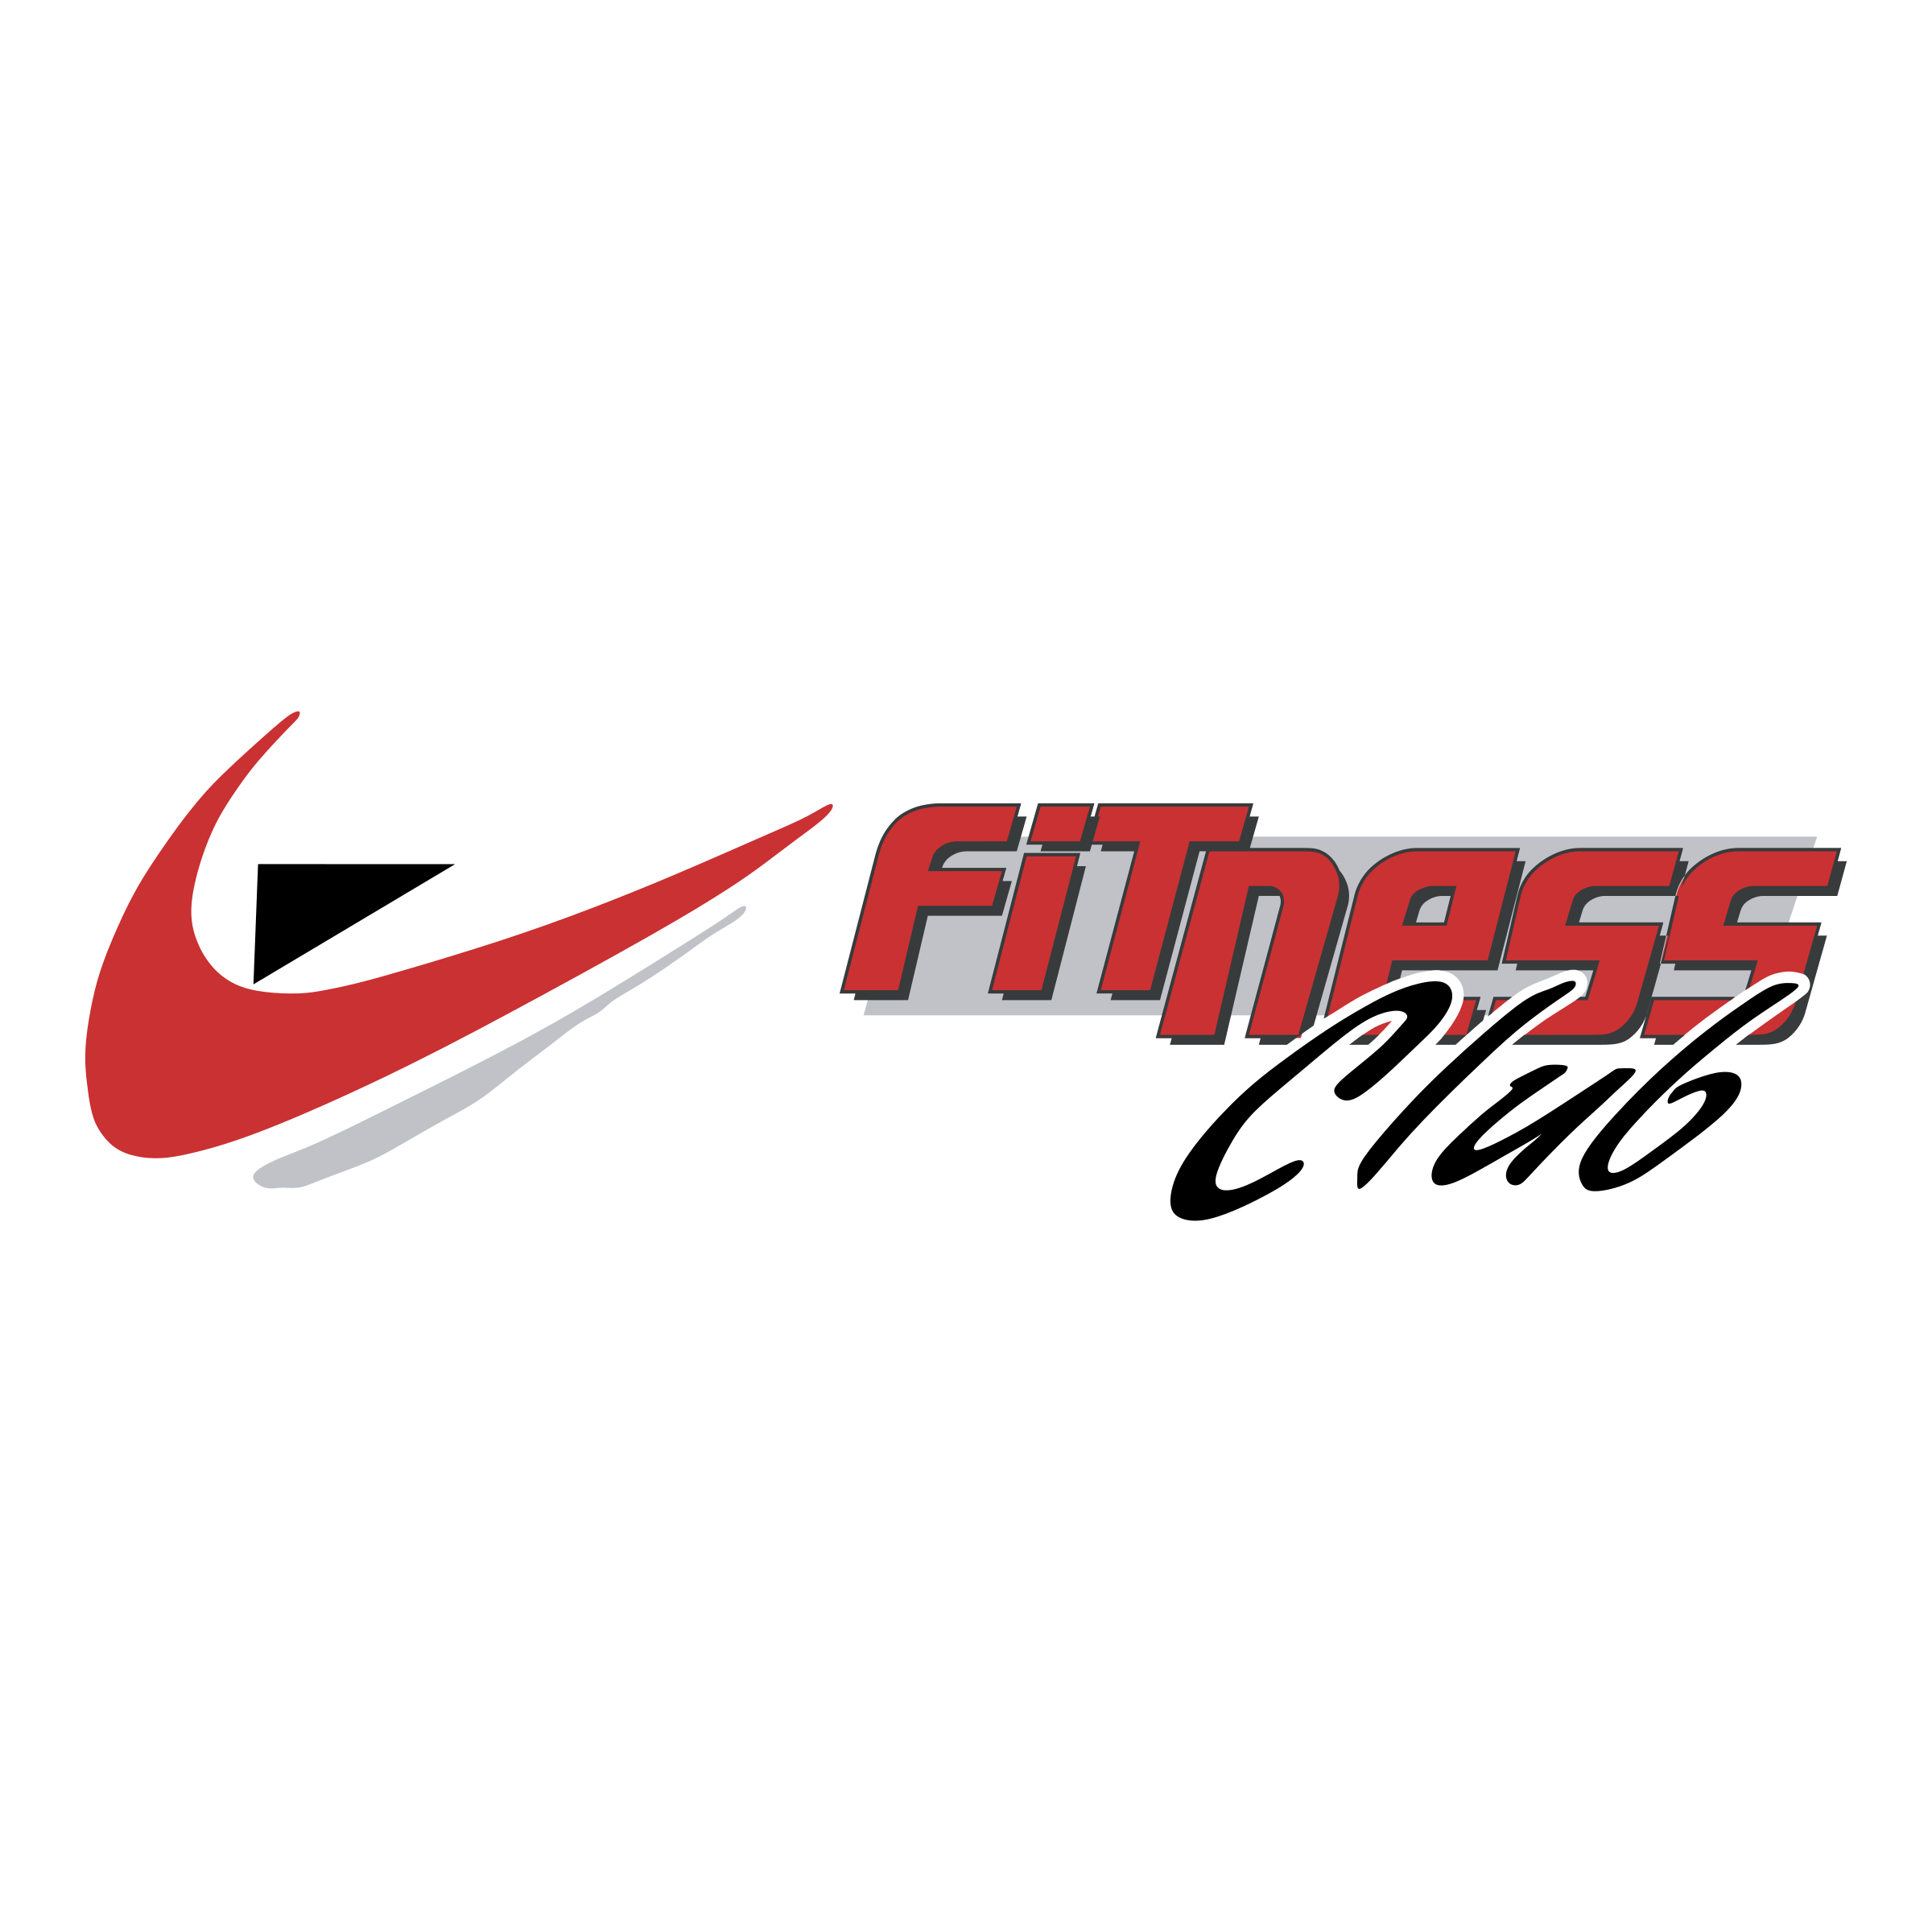 Fitness Club Logo - Fitness Club Logo PNG Transparent & SVG Vector